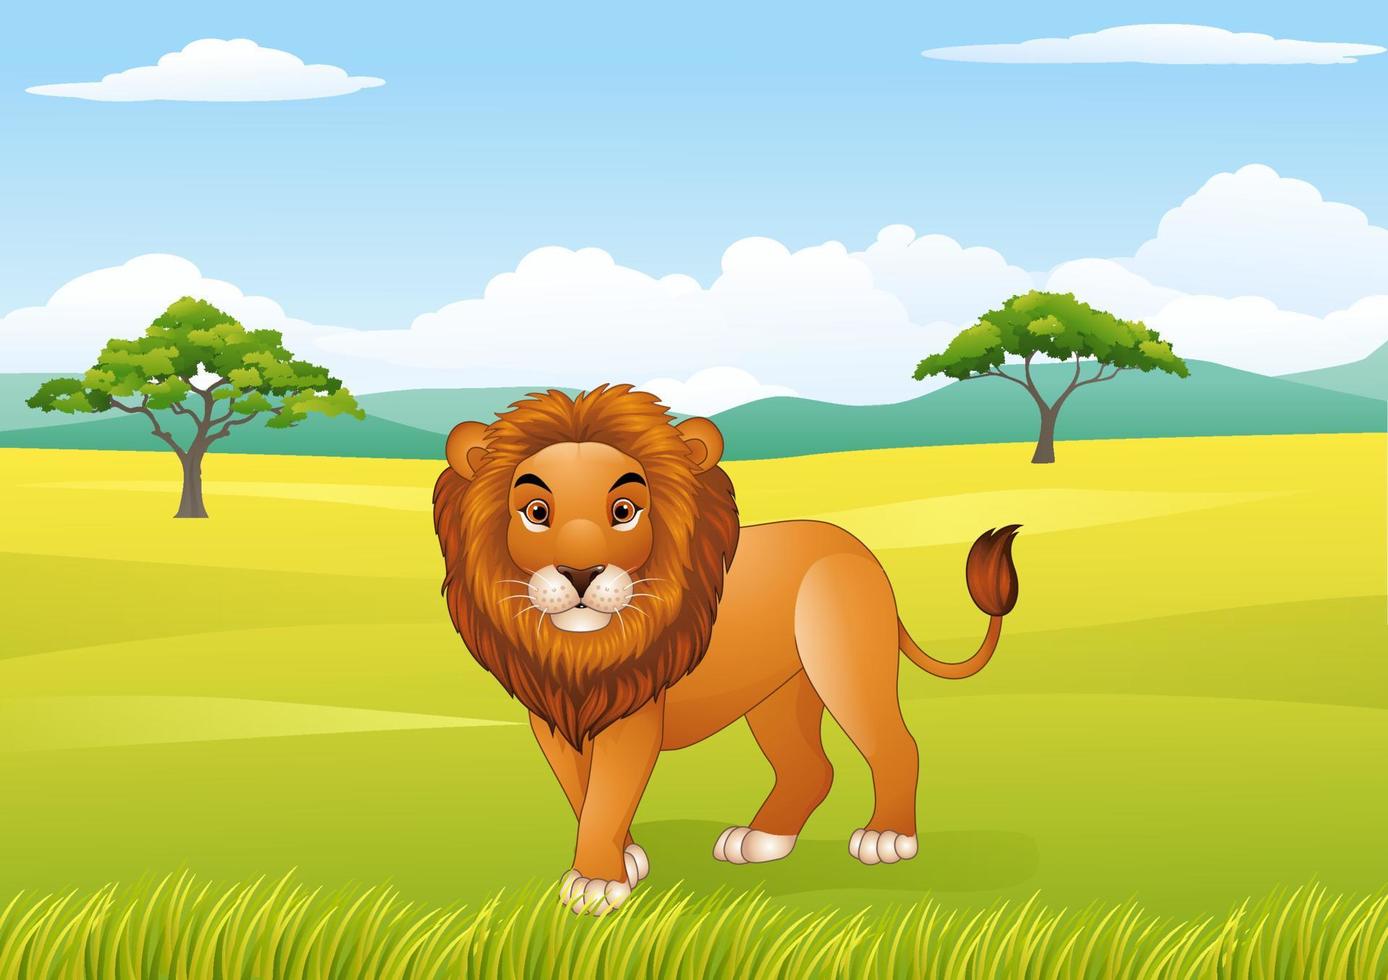 león de dibujos animados con fondo de paisaje africano vector